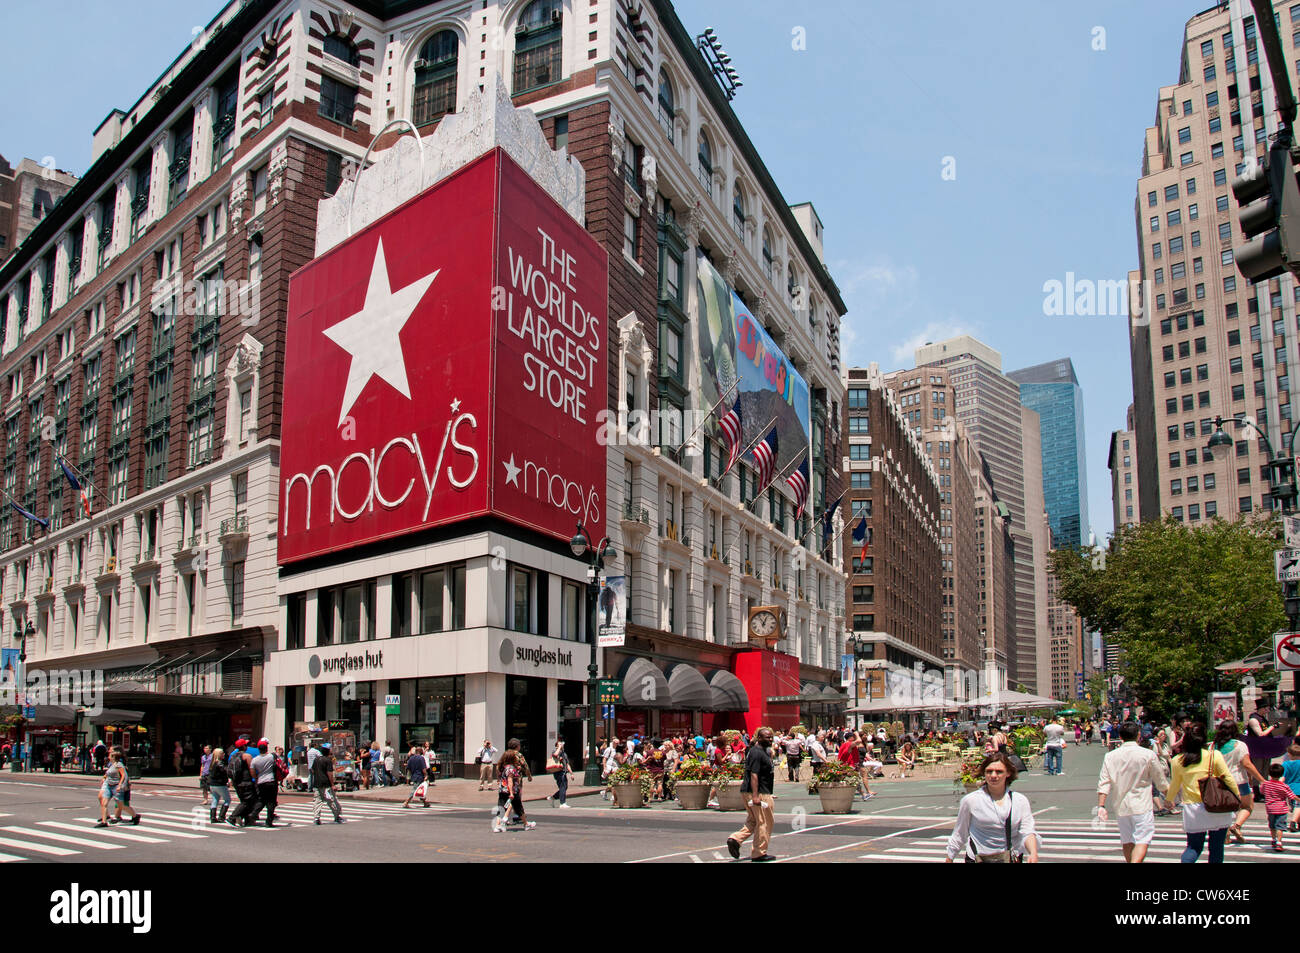 Macy S Herald Square Midtown Manhattan World S Largest Store New York